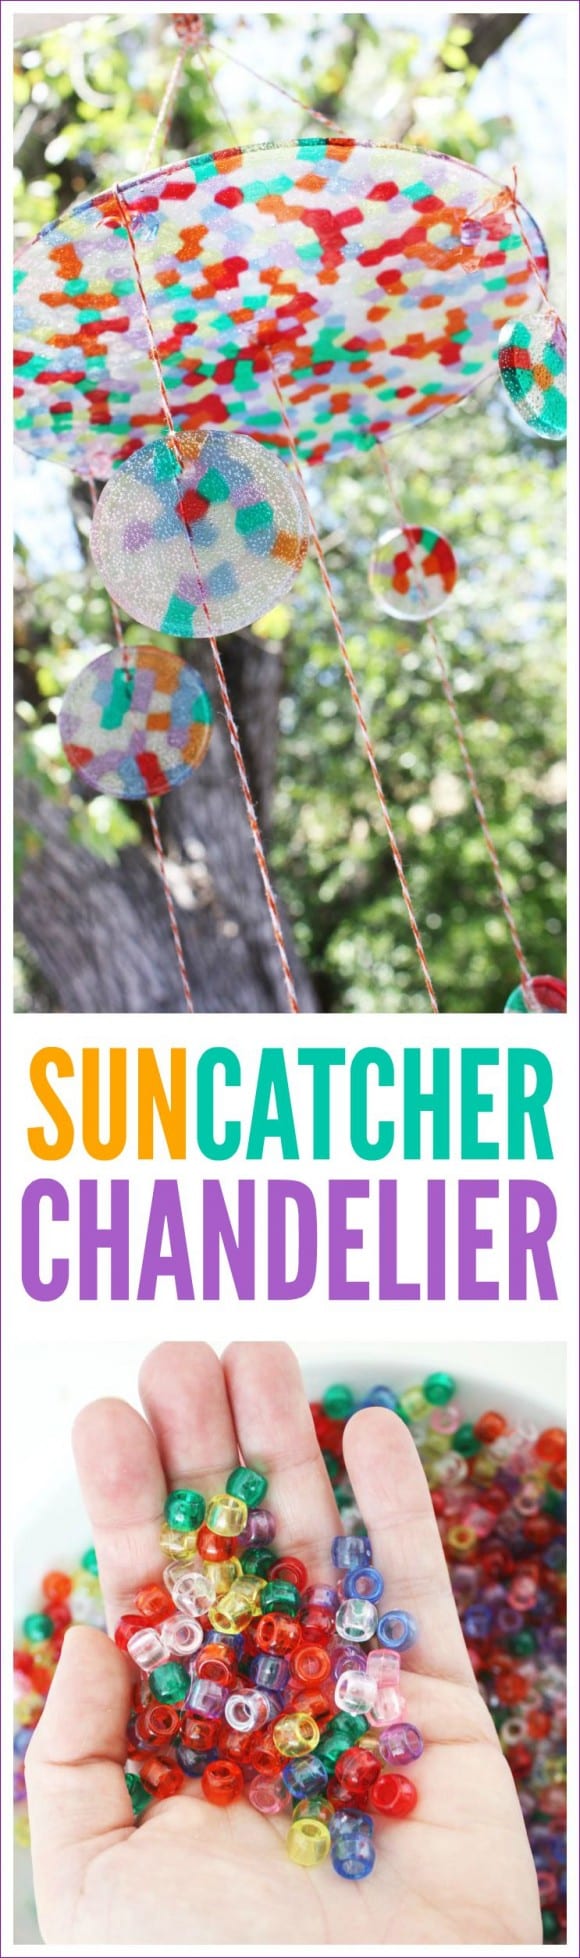 Suncatcher chandelier DIY | CatchMyParty.com